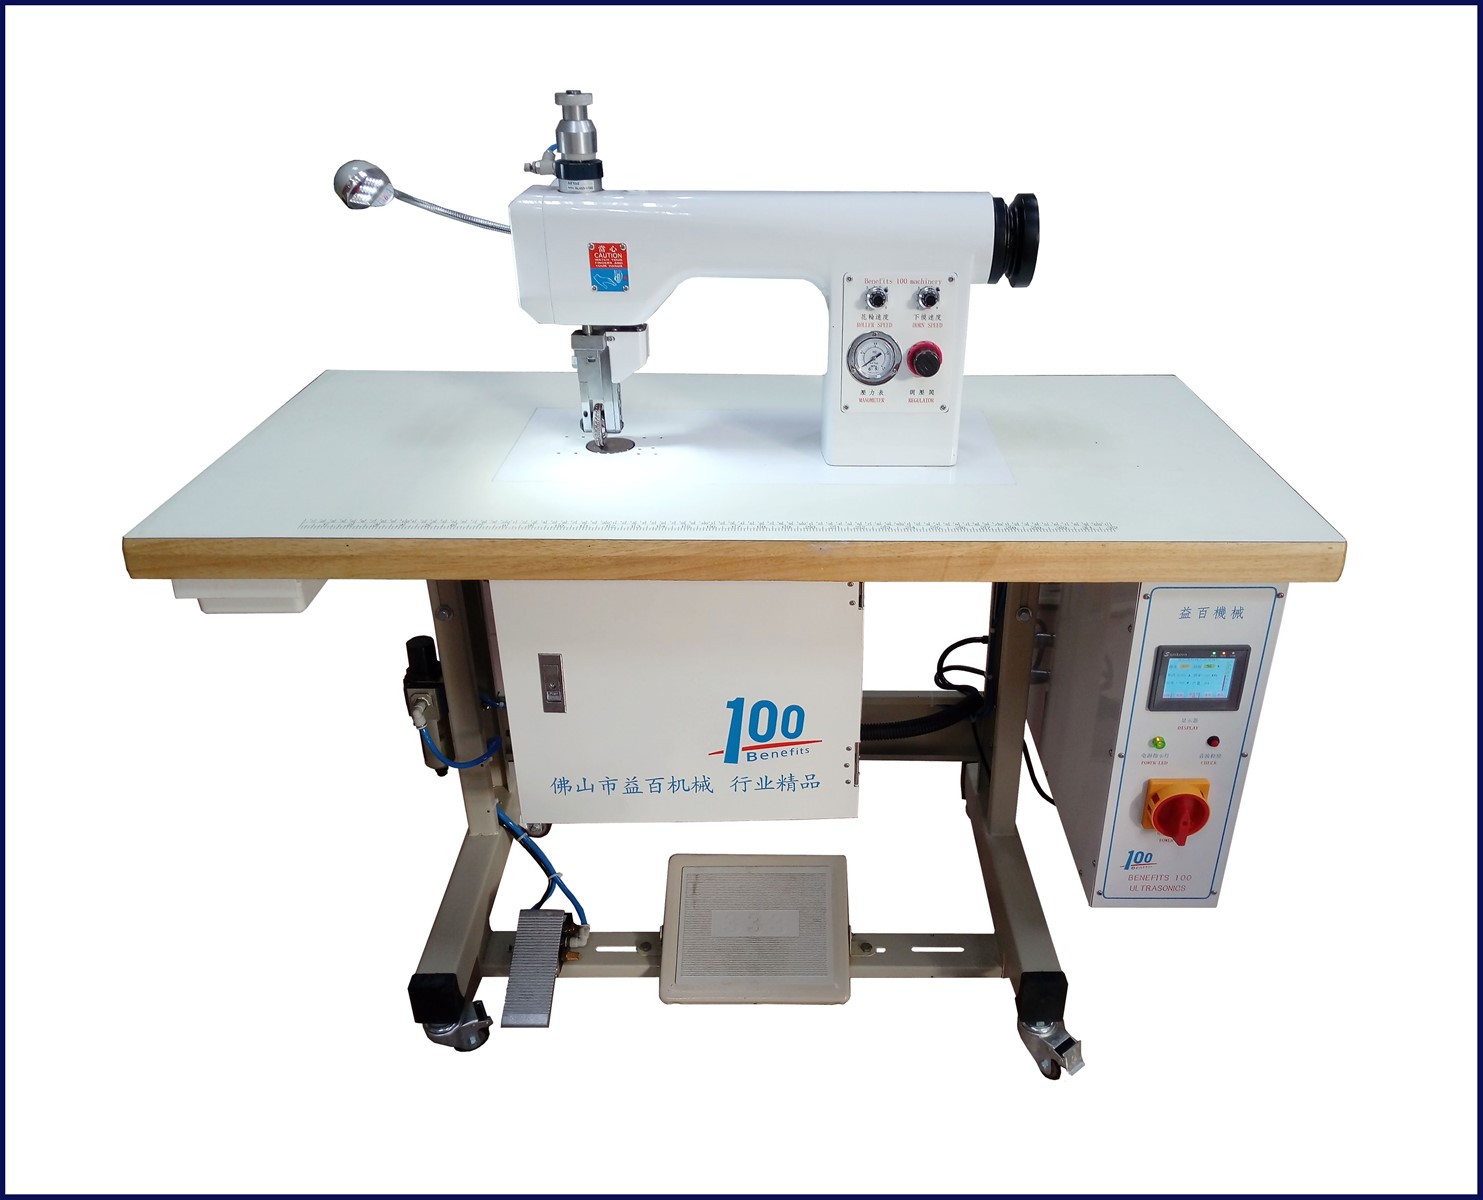 ultrasonic welding sewing machine